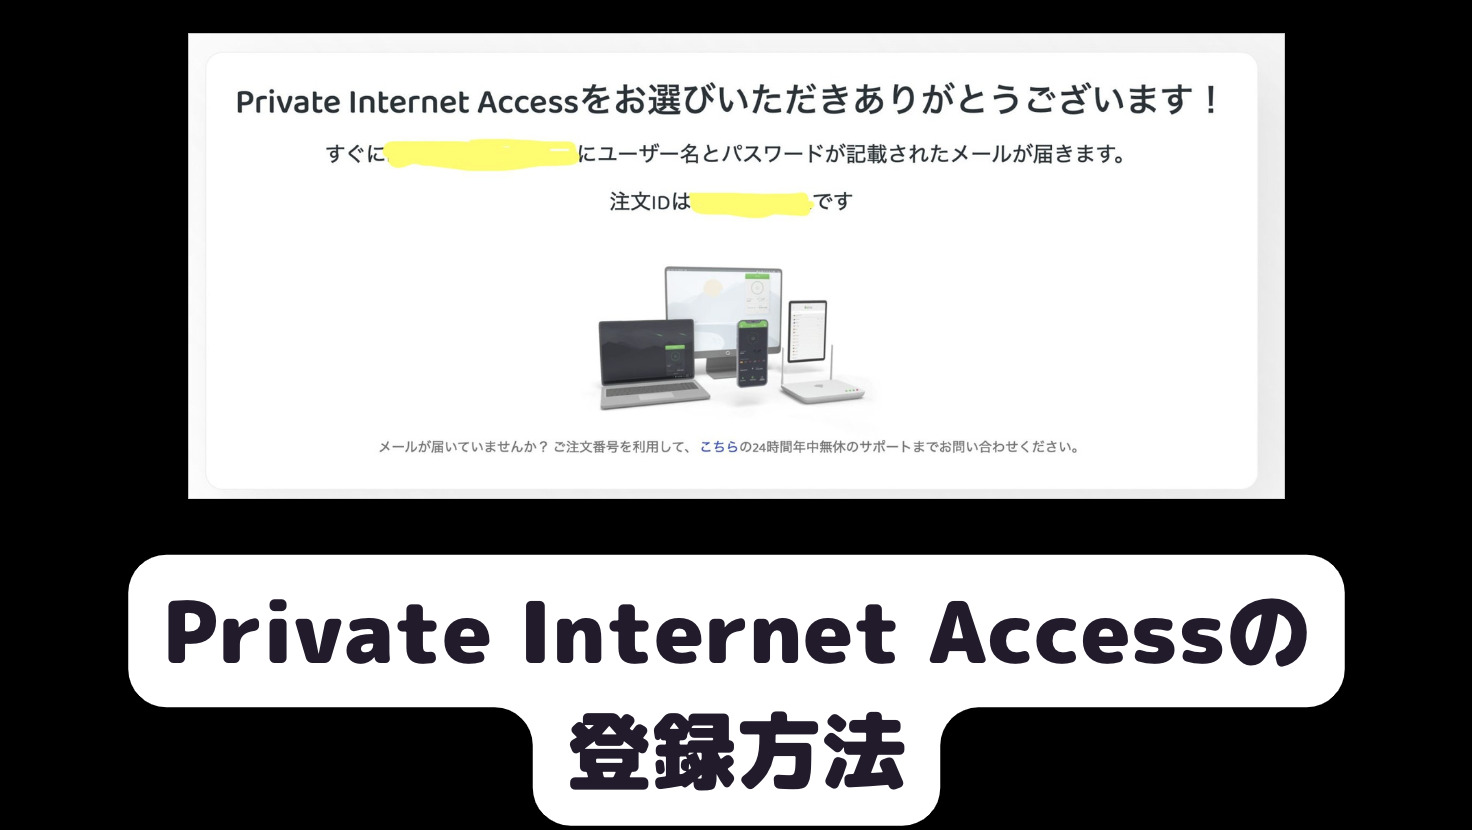 Private Internet Accessの登録方法を一から順に解説！日本語画面で簡単にできます